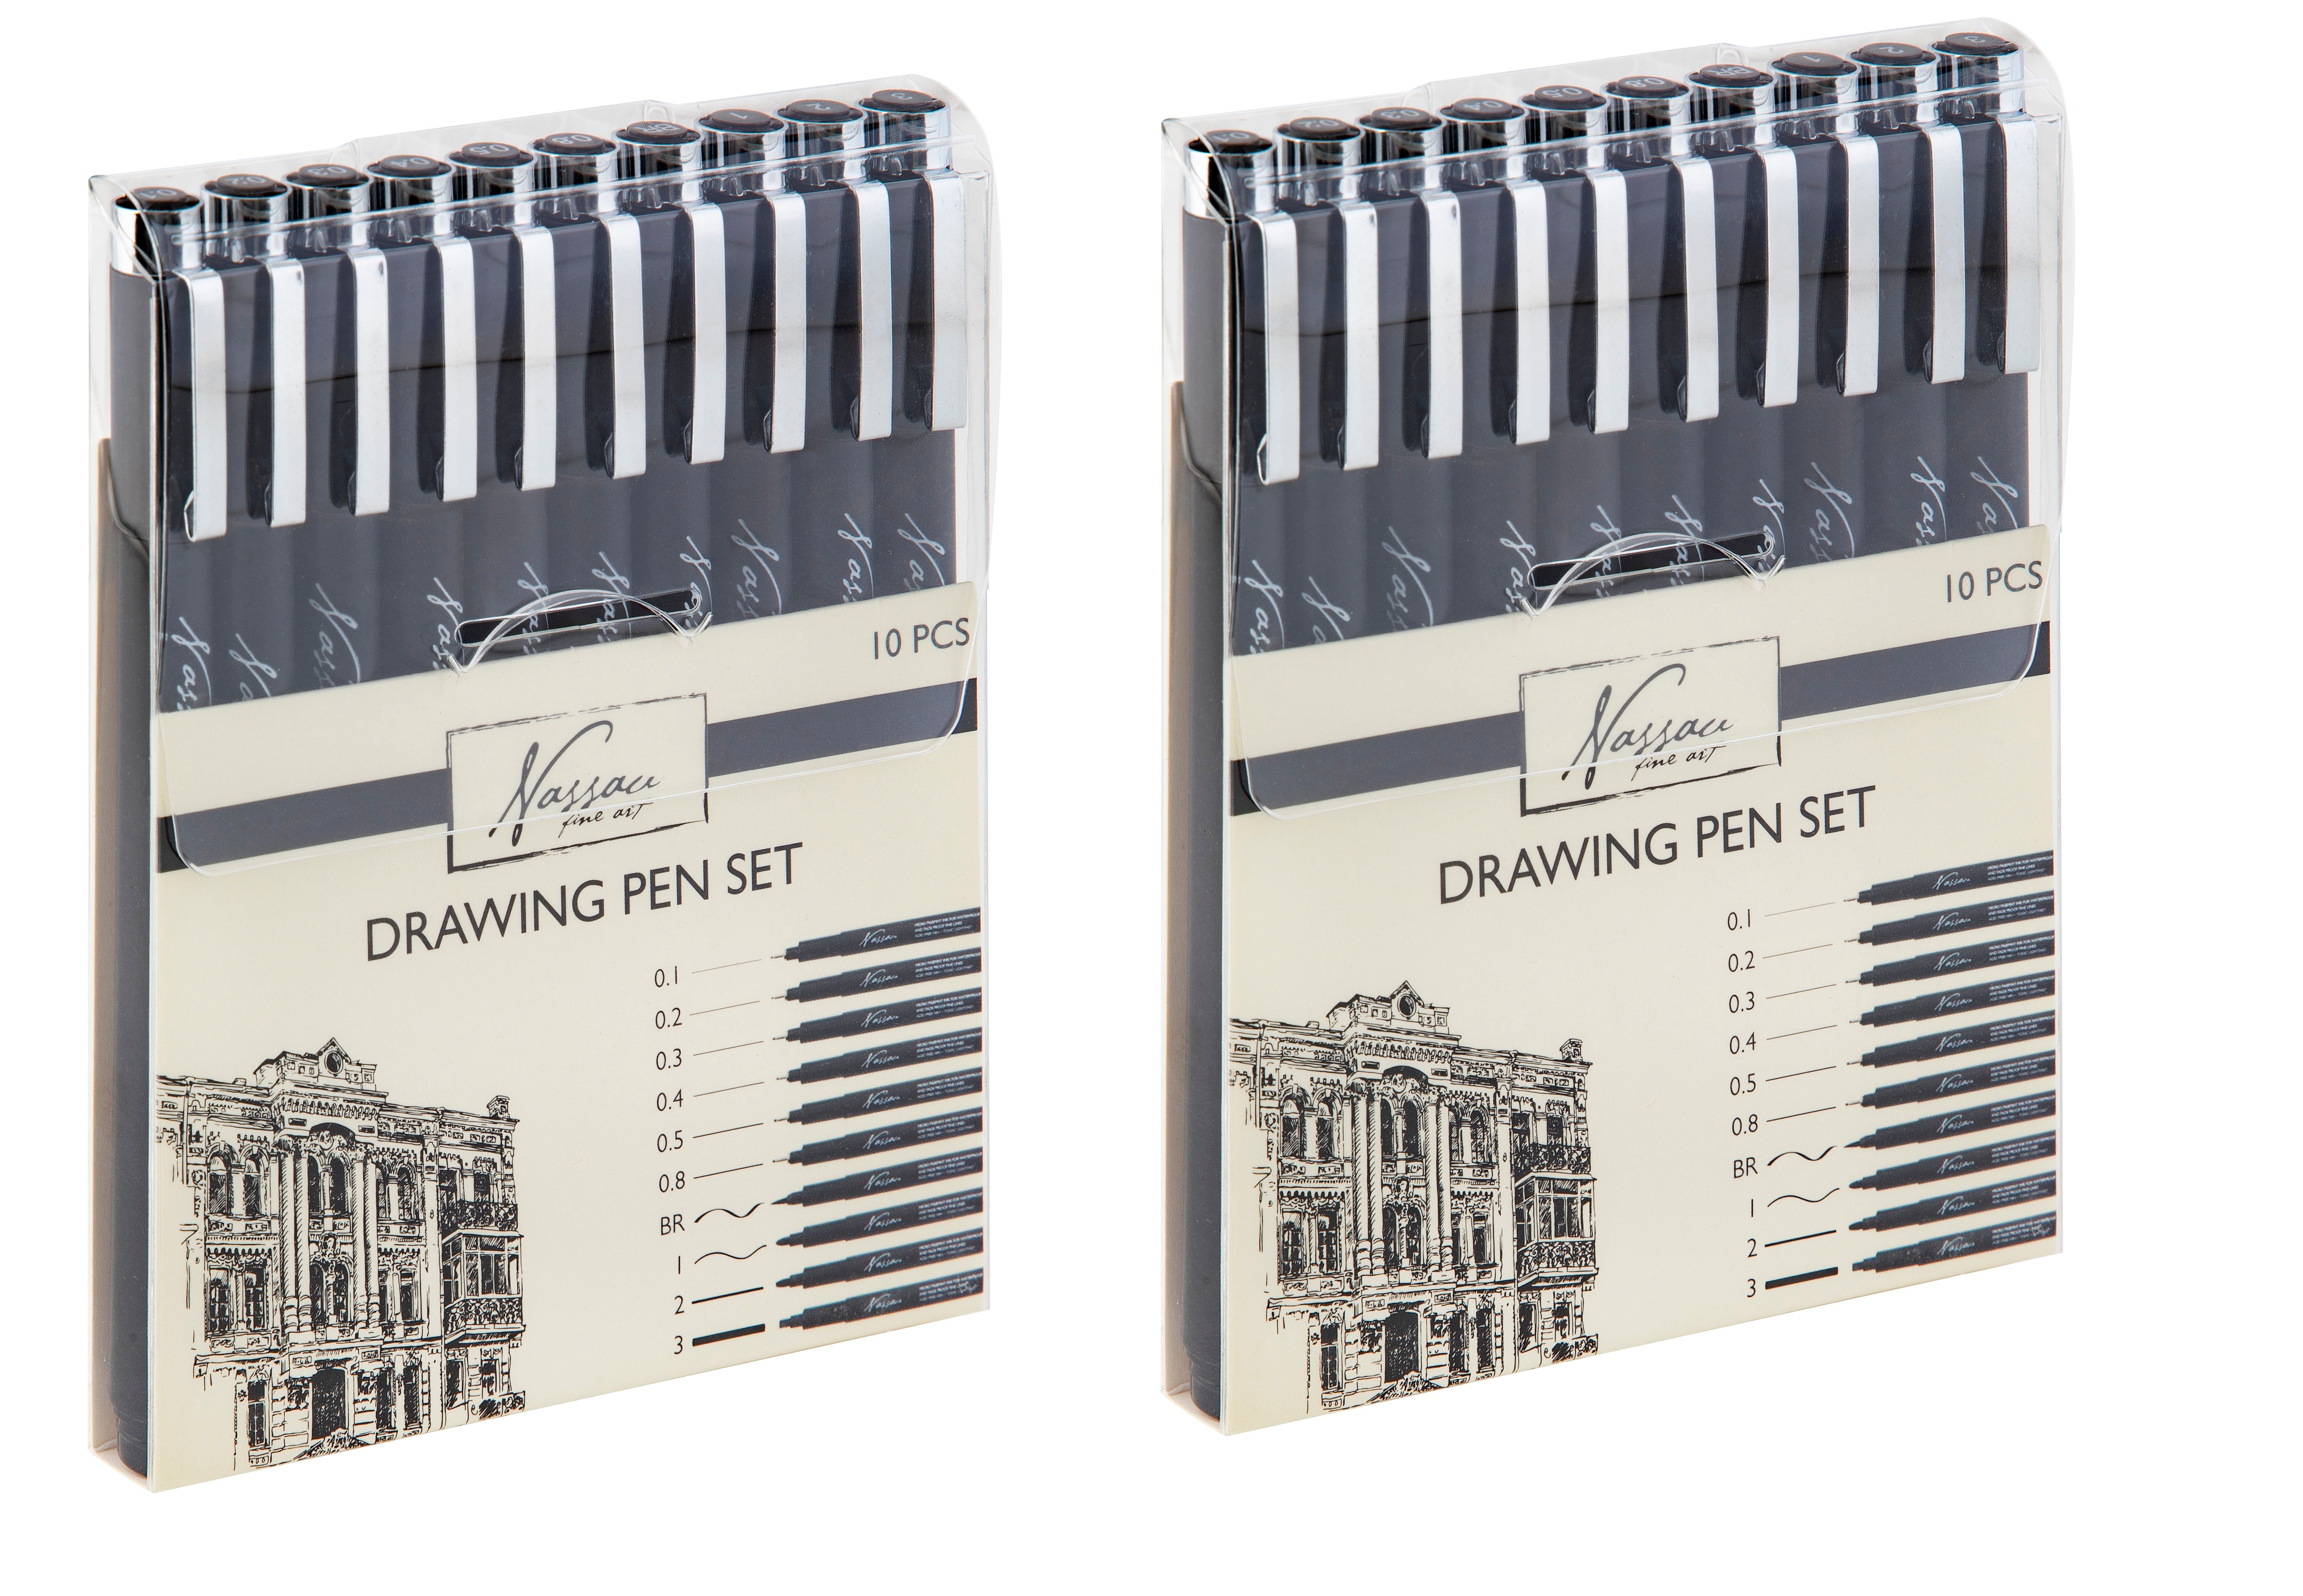 Nassau - Drawing pen set fineliners 10pcs x 2 - Bundle - Leker